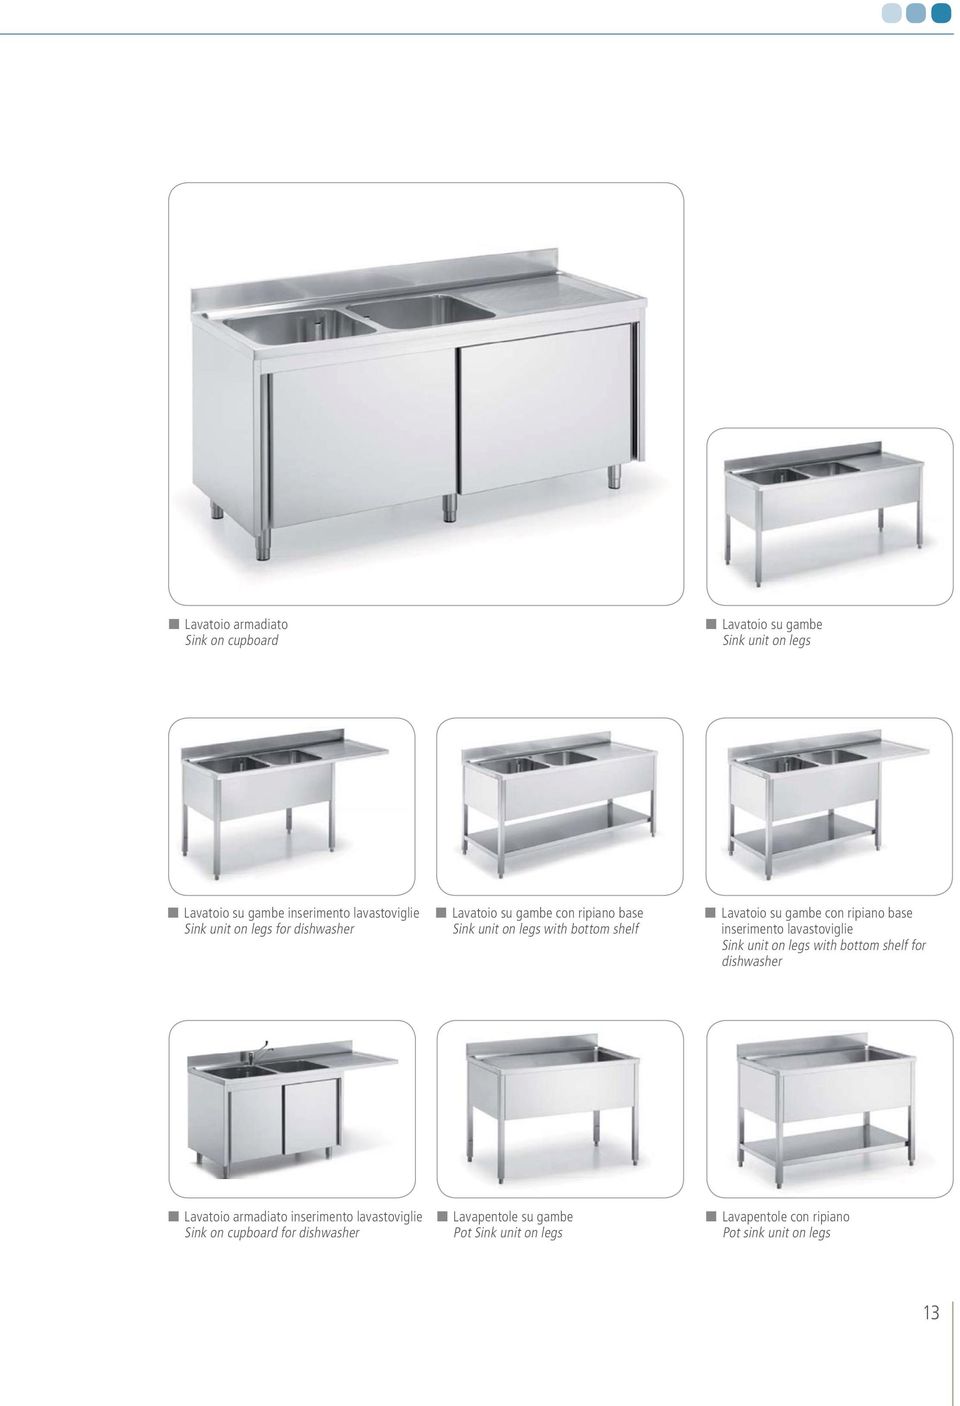 ripiano base inserimento lavastoviglie Sink unit on legs with bottom shelf for dishwasher n Lavatoio armadiato inserimento